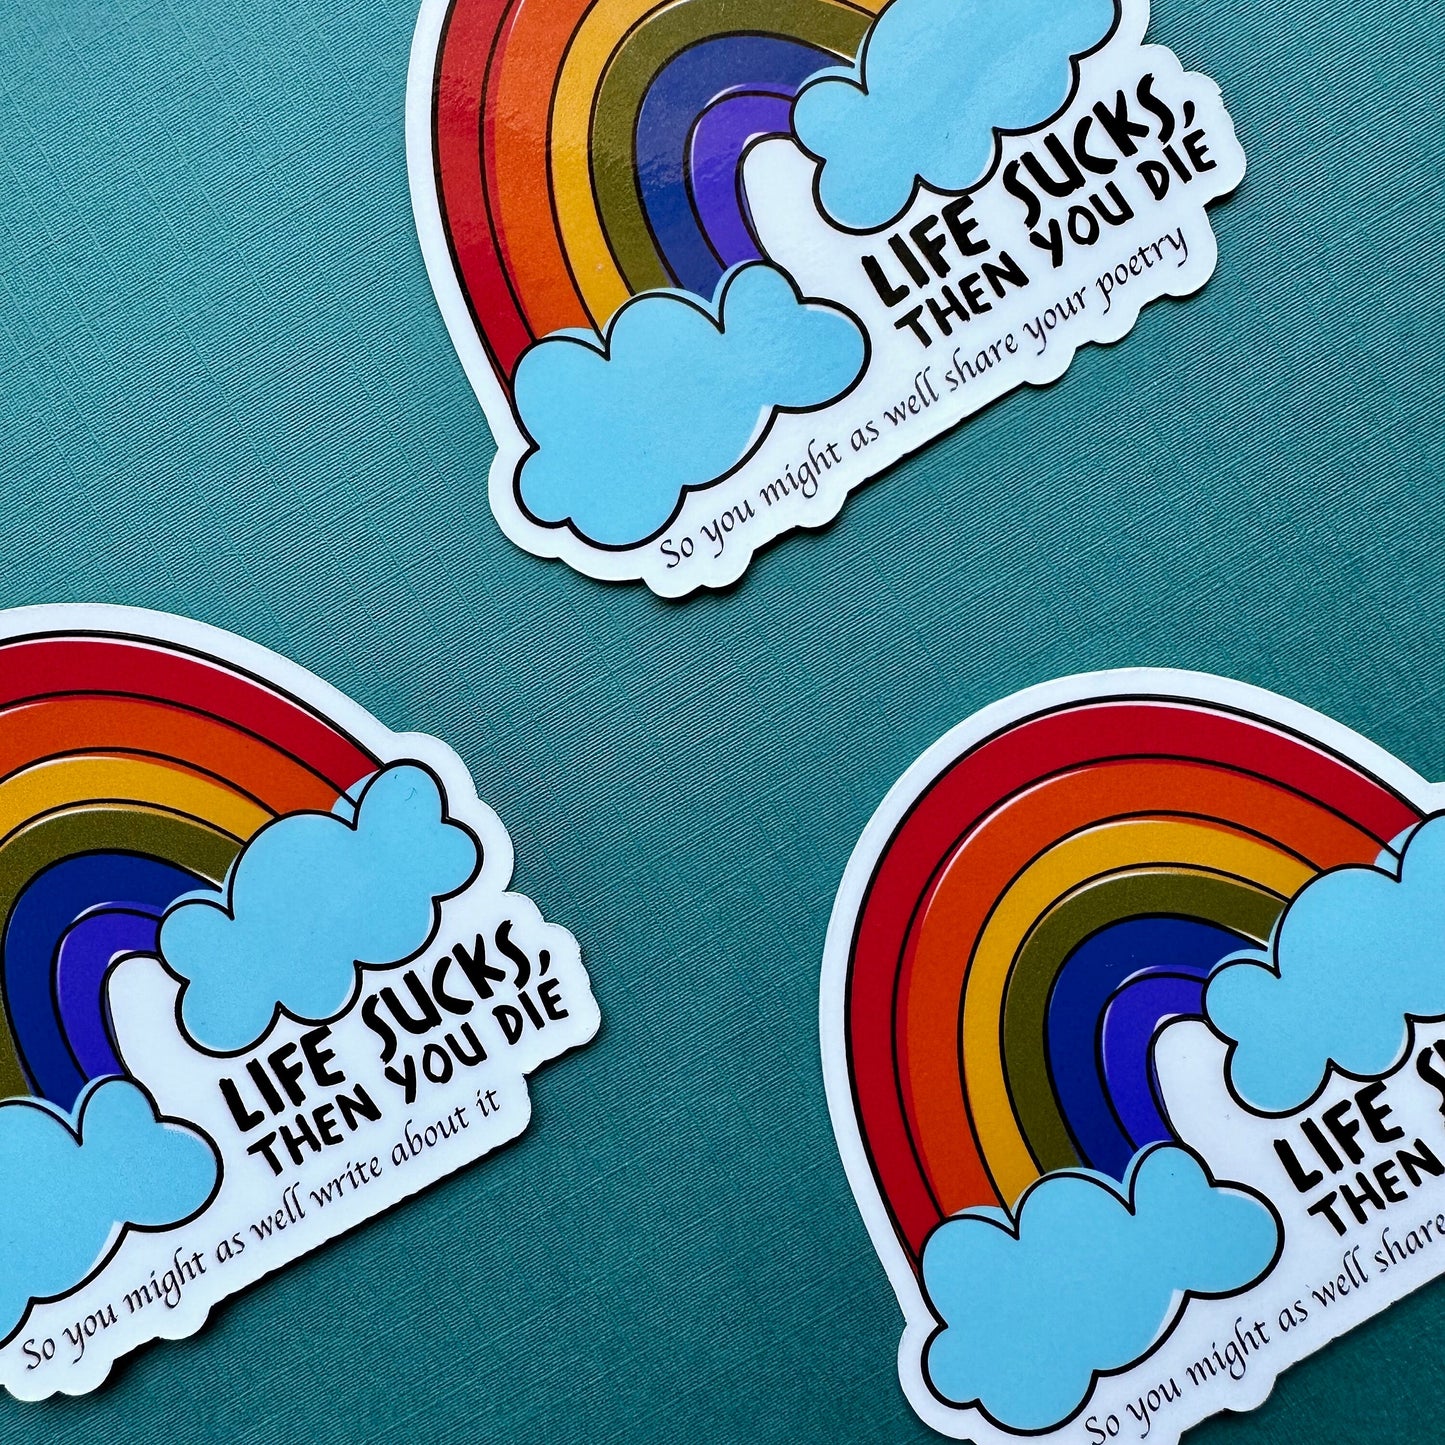 Life Sucks Rainbow Sticker: Share your art